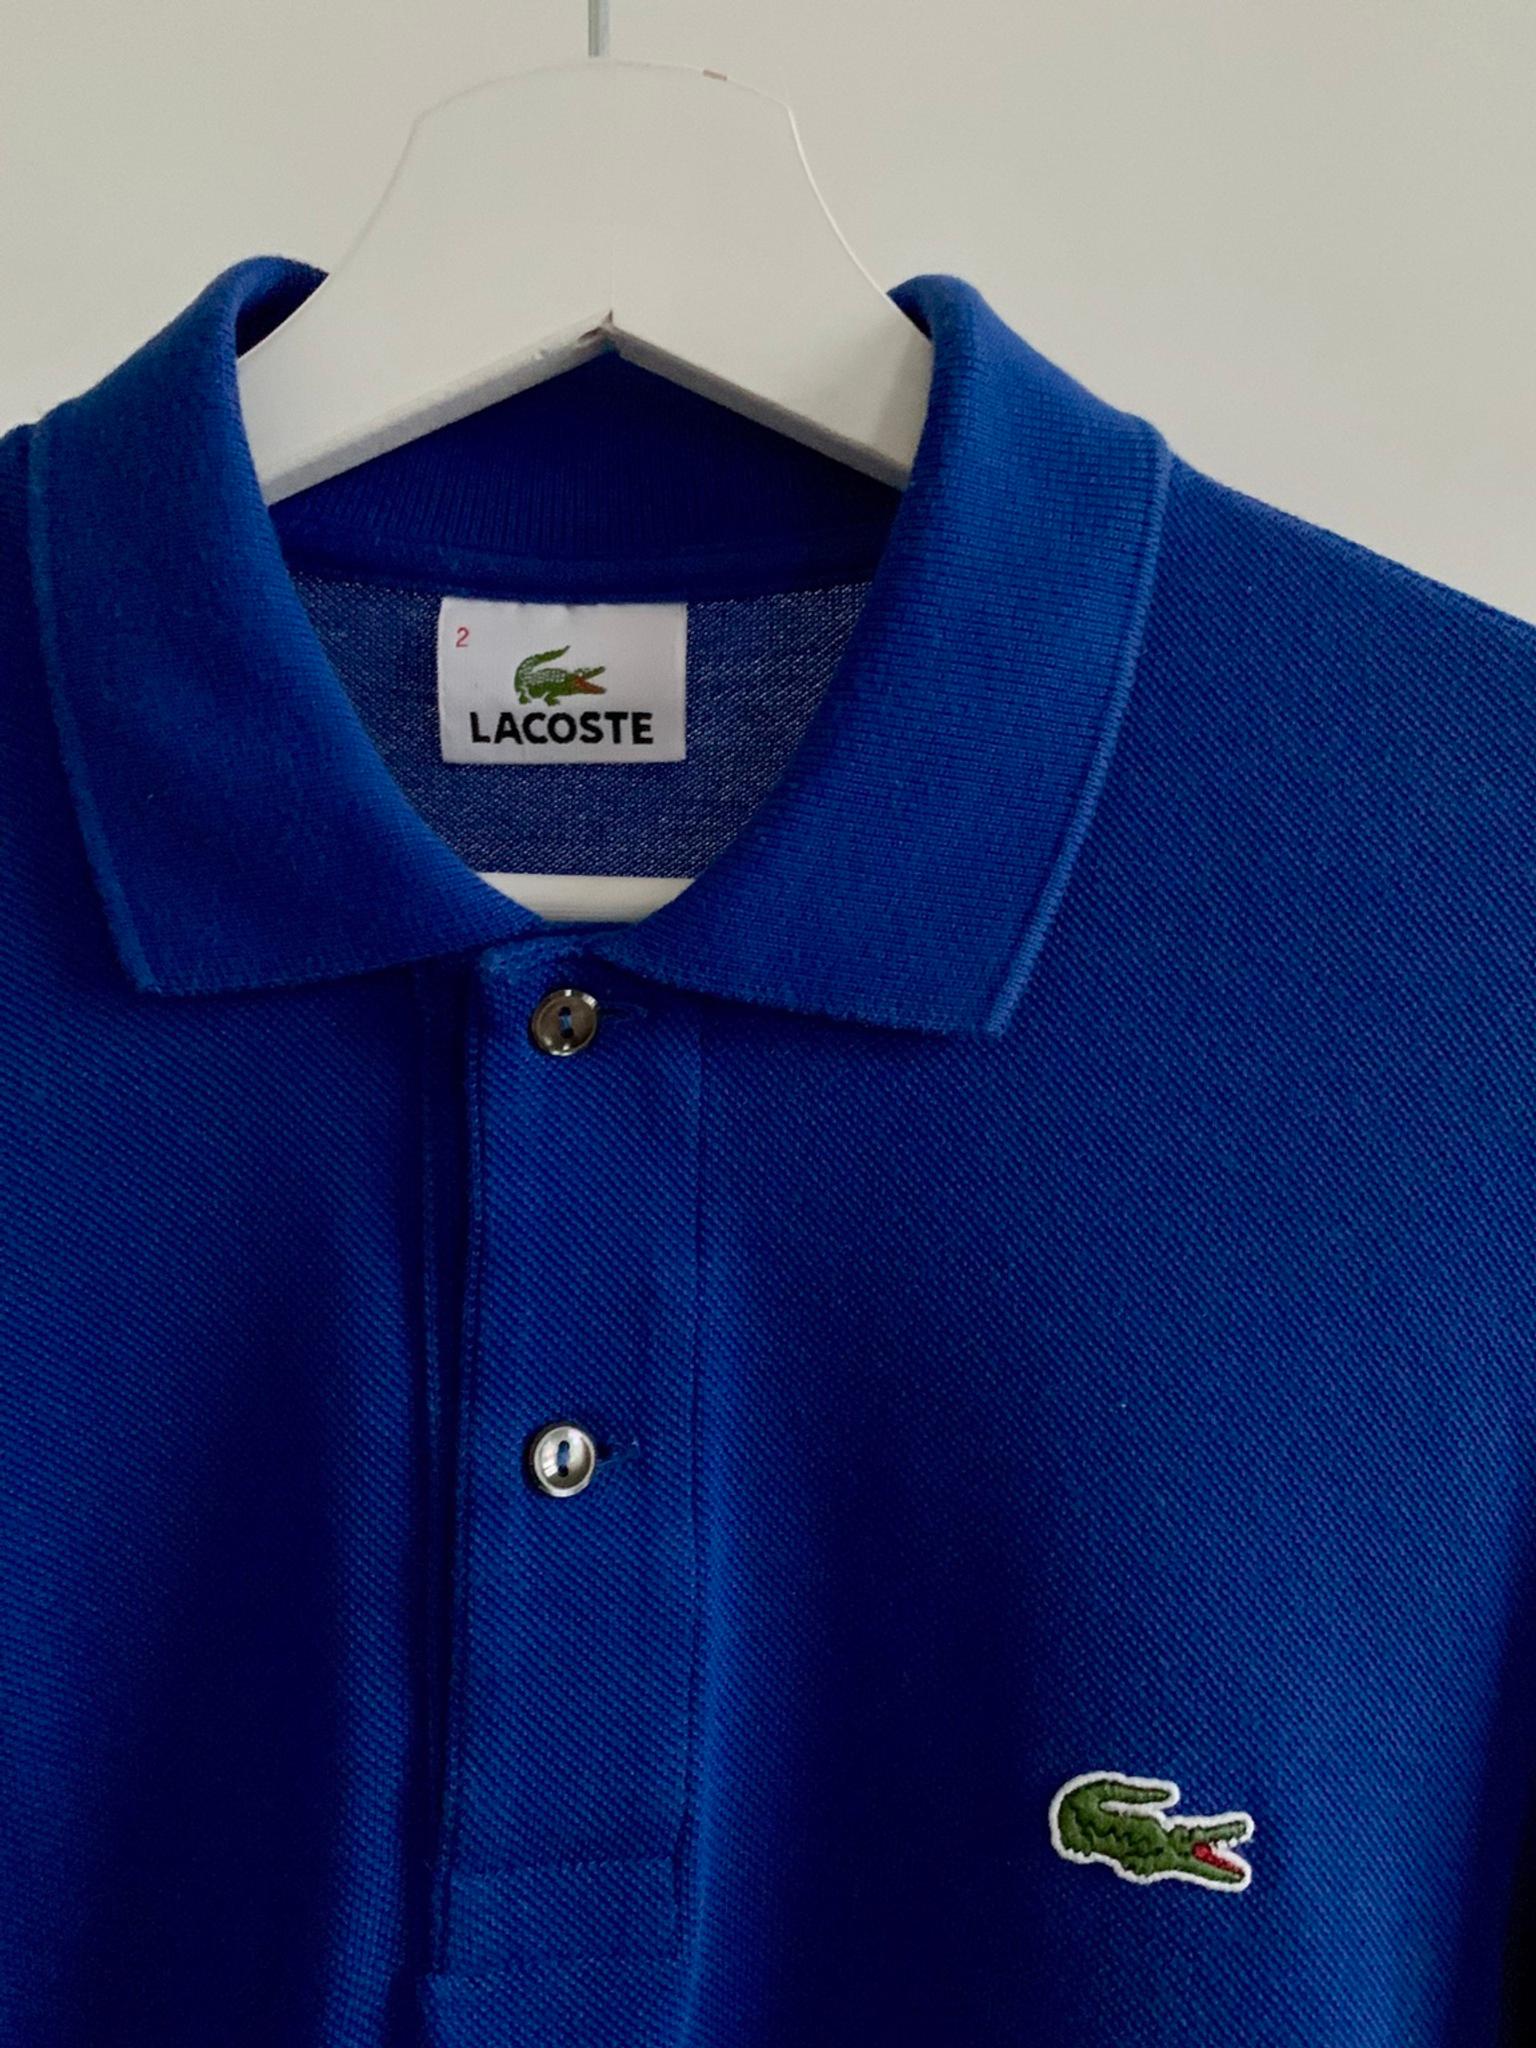 Lacoste Polo Shirts Blue Nils Stucki Kieferorthopade - how to get free t shirts on roblox 2019 nils stucki kieferorthopade